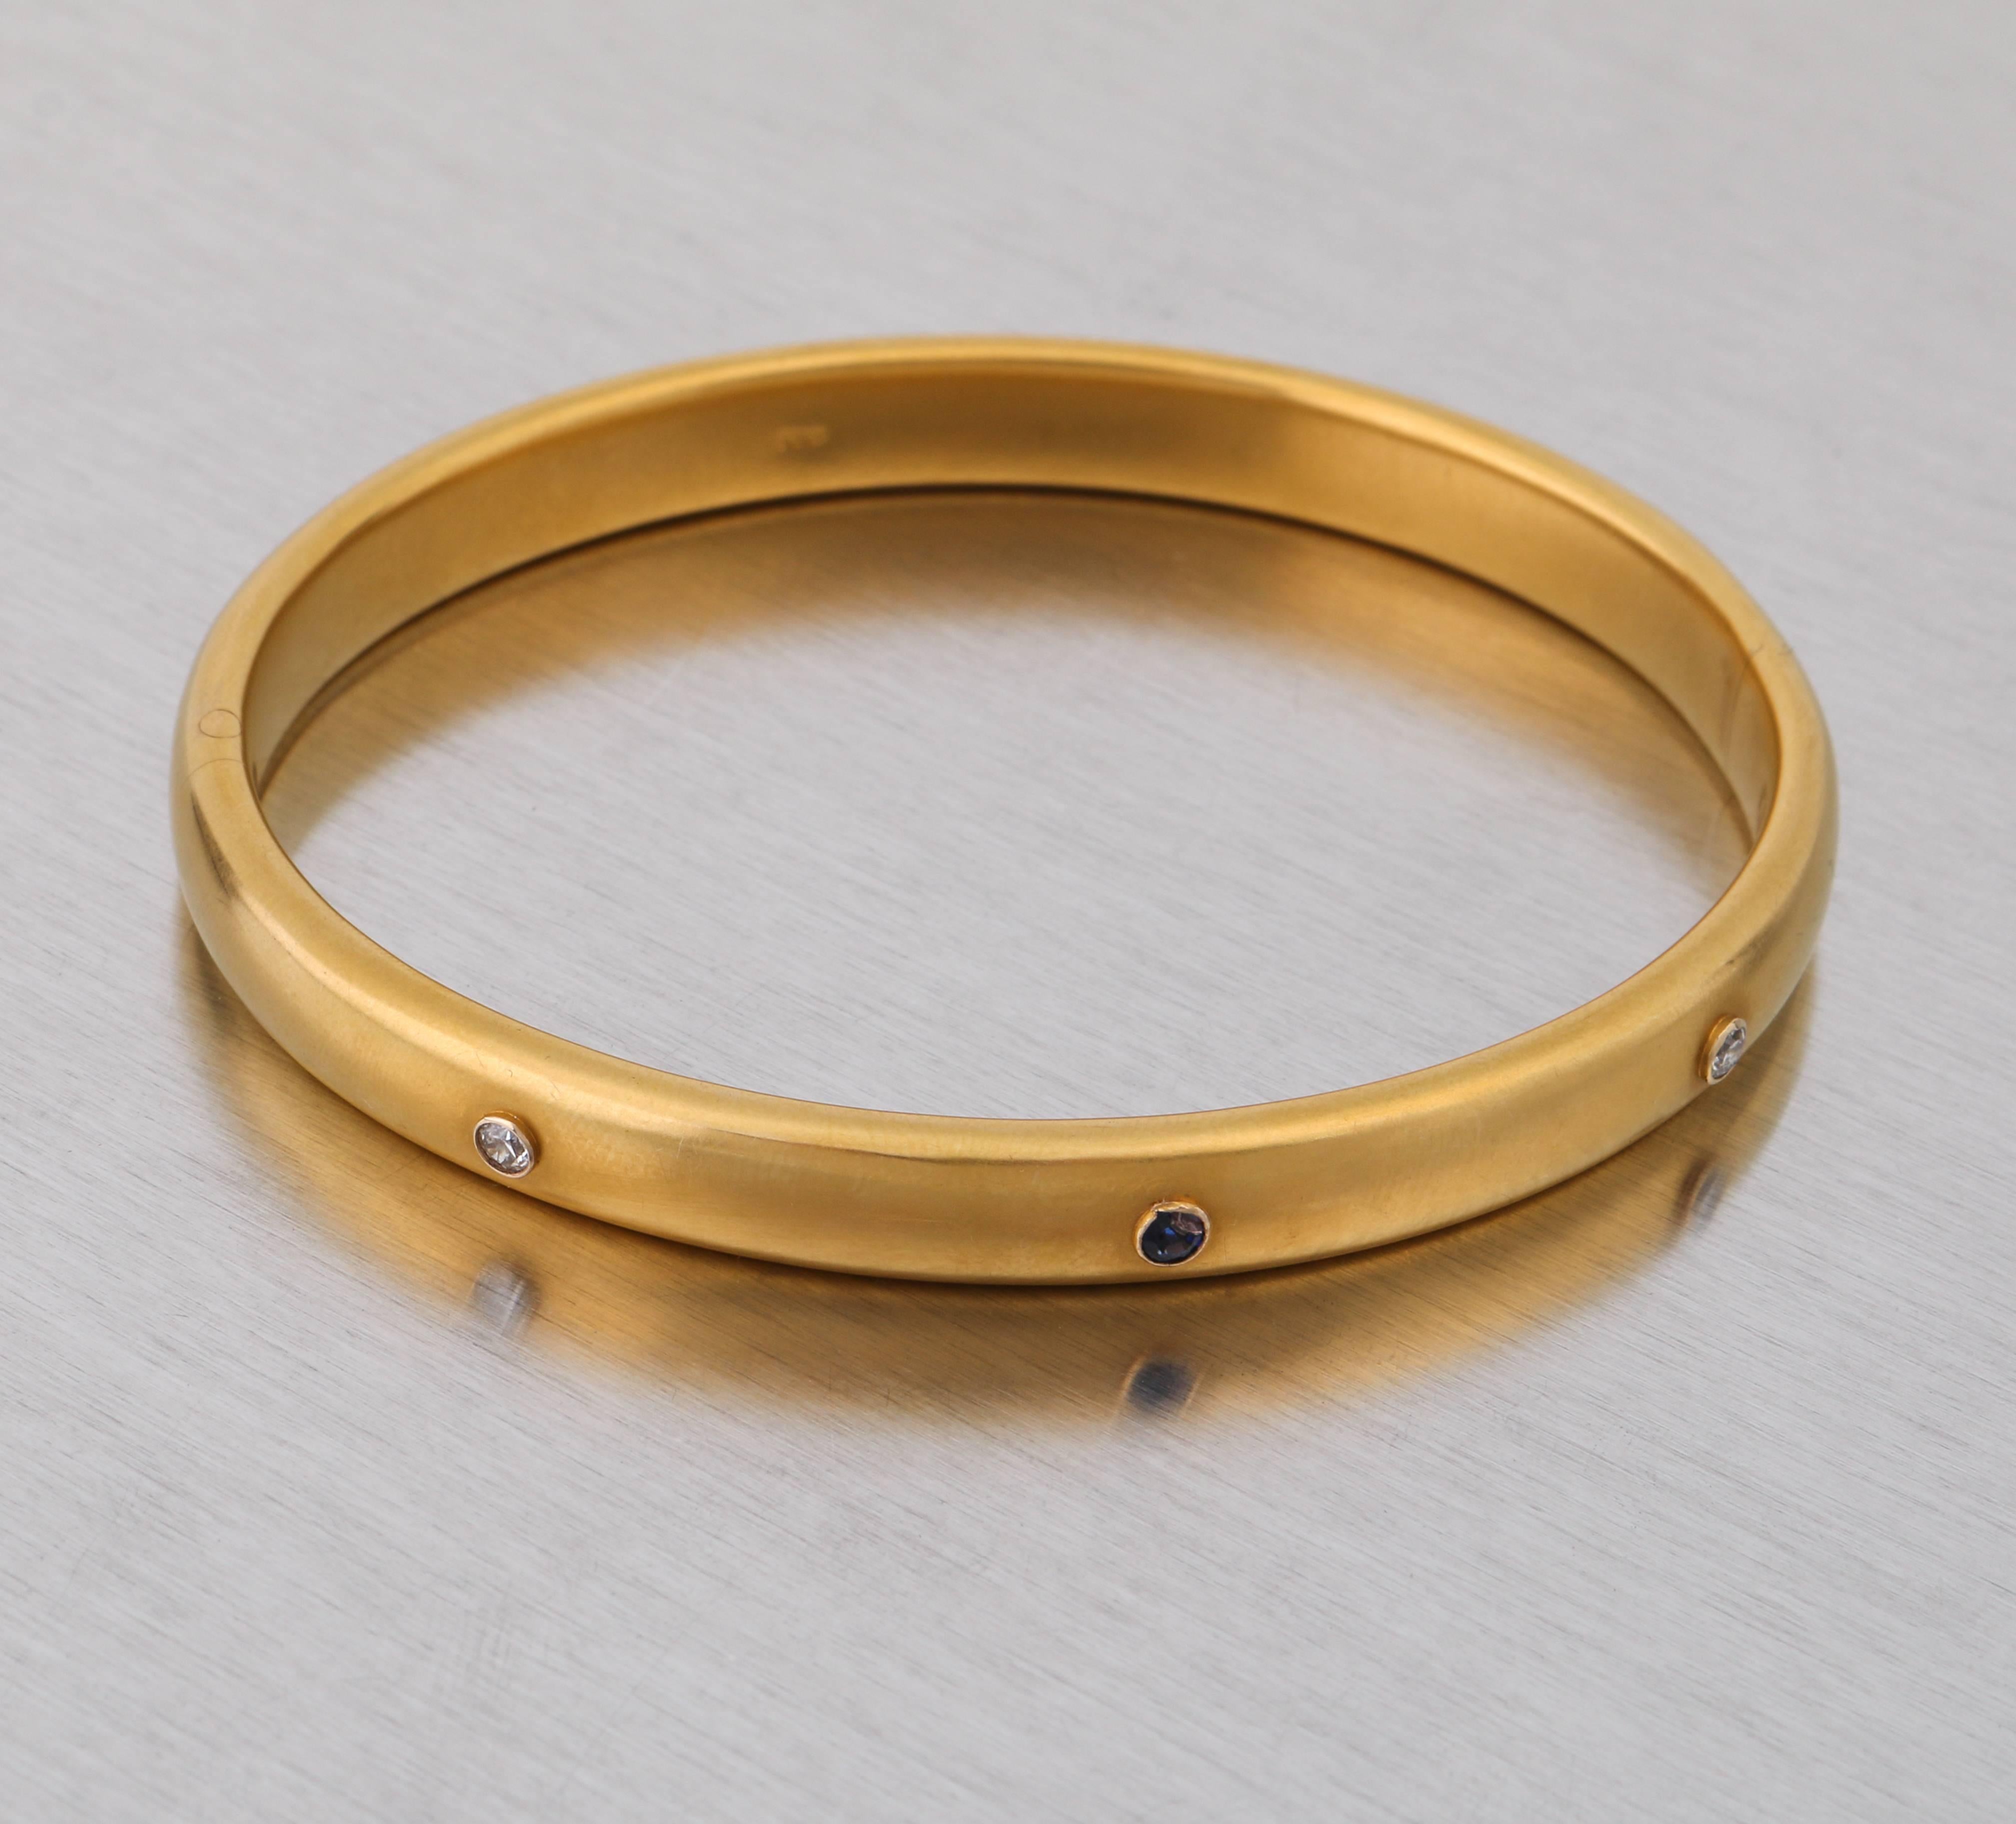 Antique Edwardian c.1900's Greek 14KT gold bangle with 2 round bezel set diamonds and 1 sapphire. Bracelet measures approximately 3